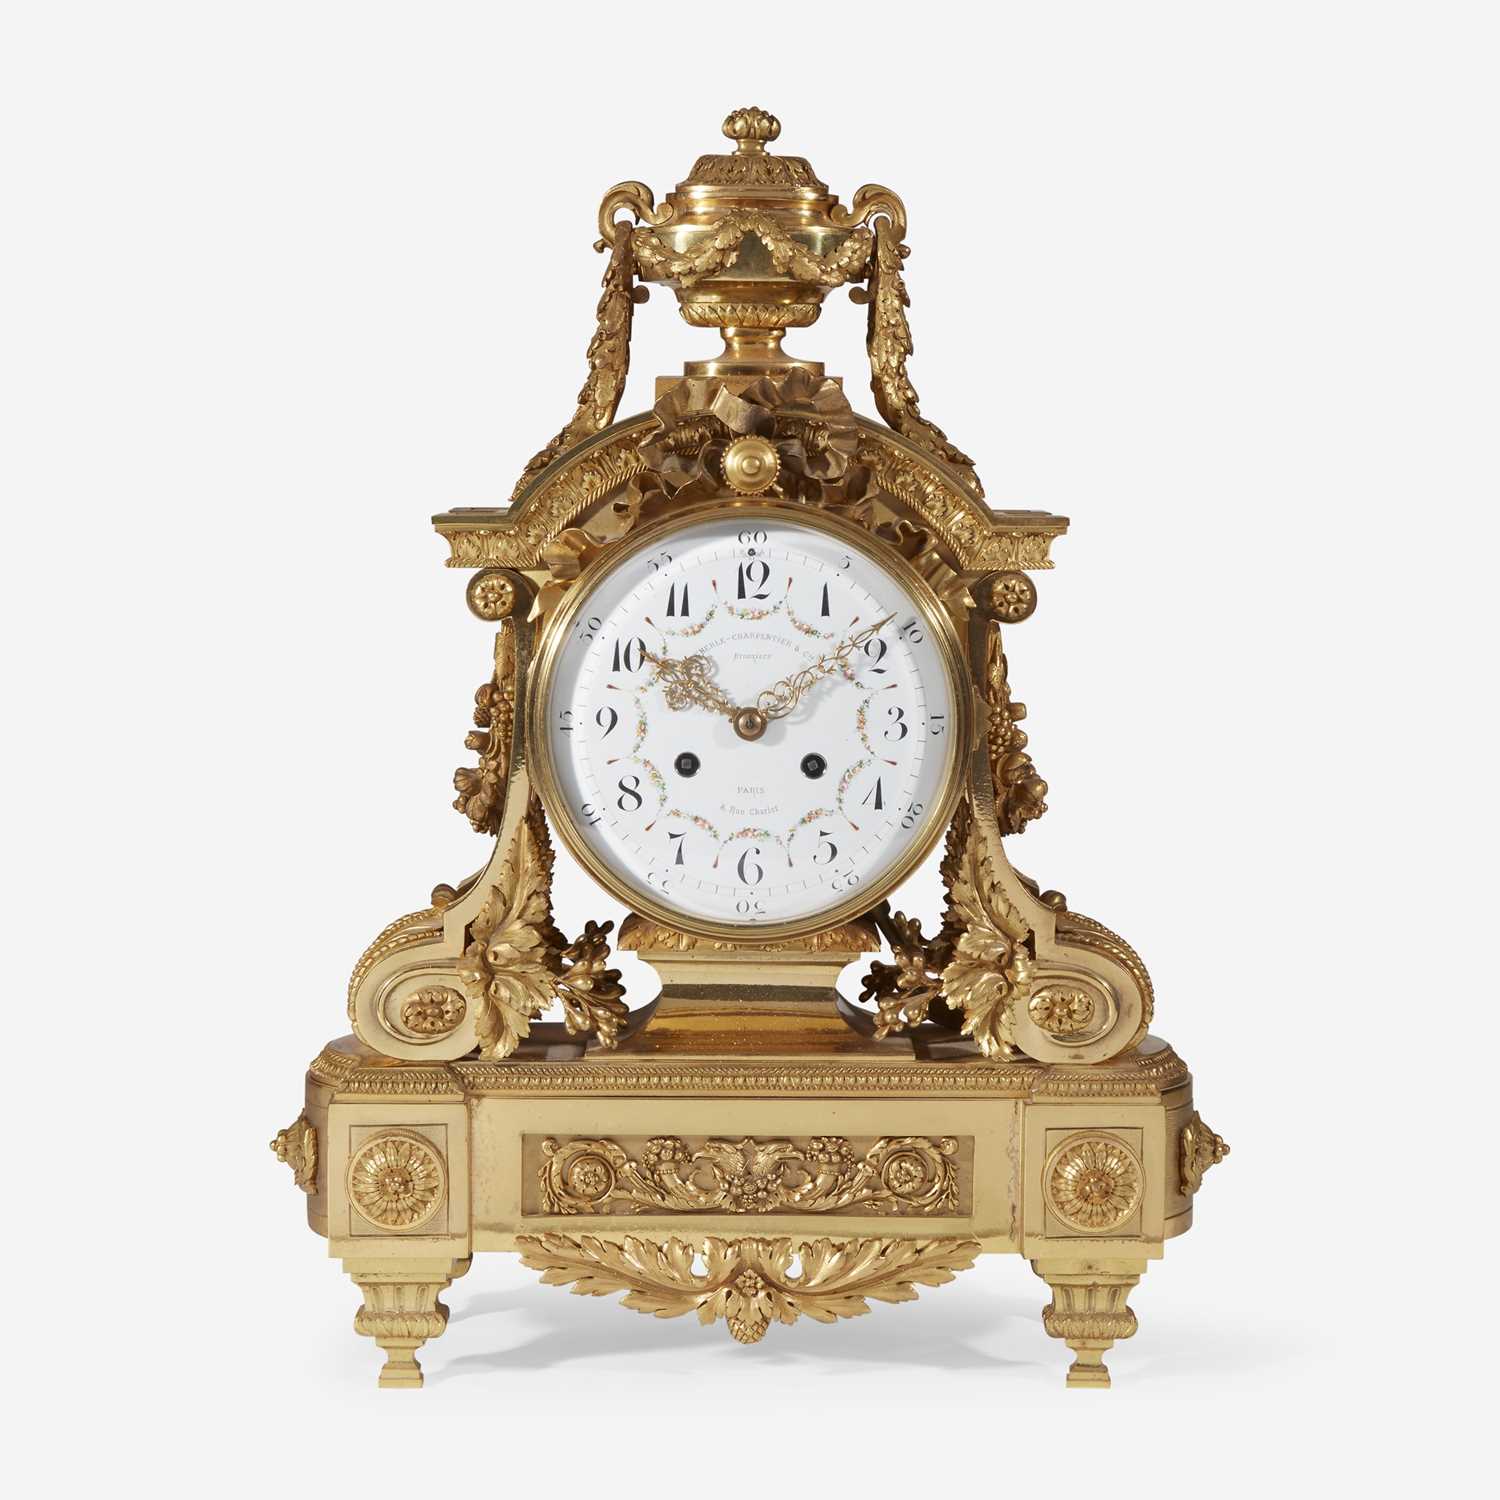 Lot 25 - A Louis XVI Style Gilt-Bronze Mantel Clock